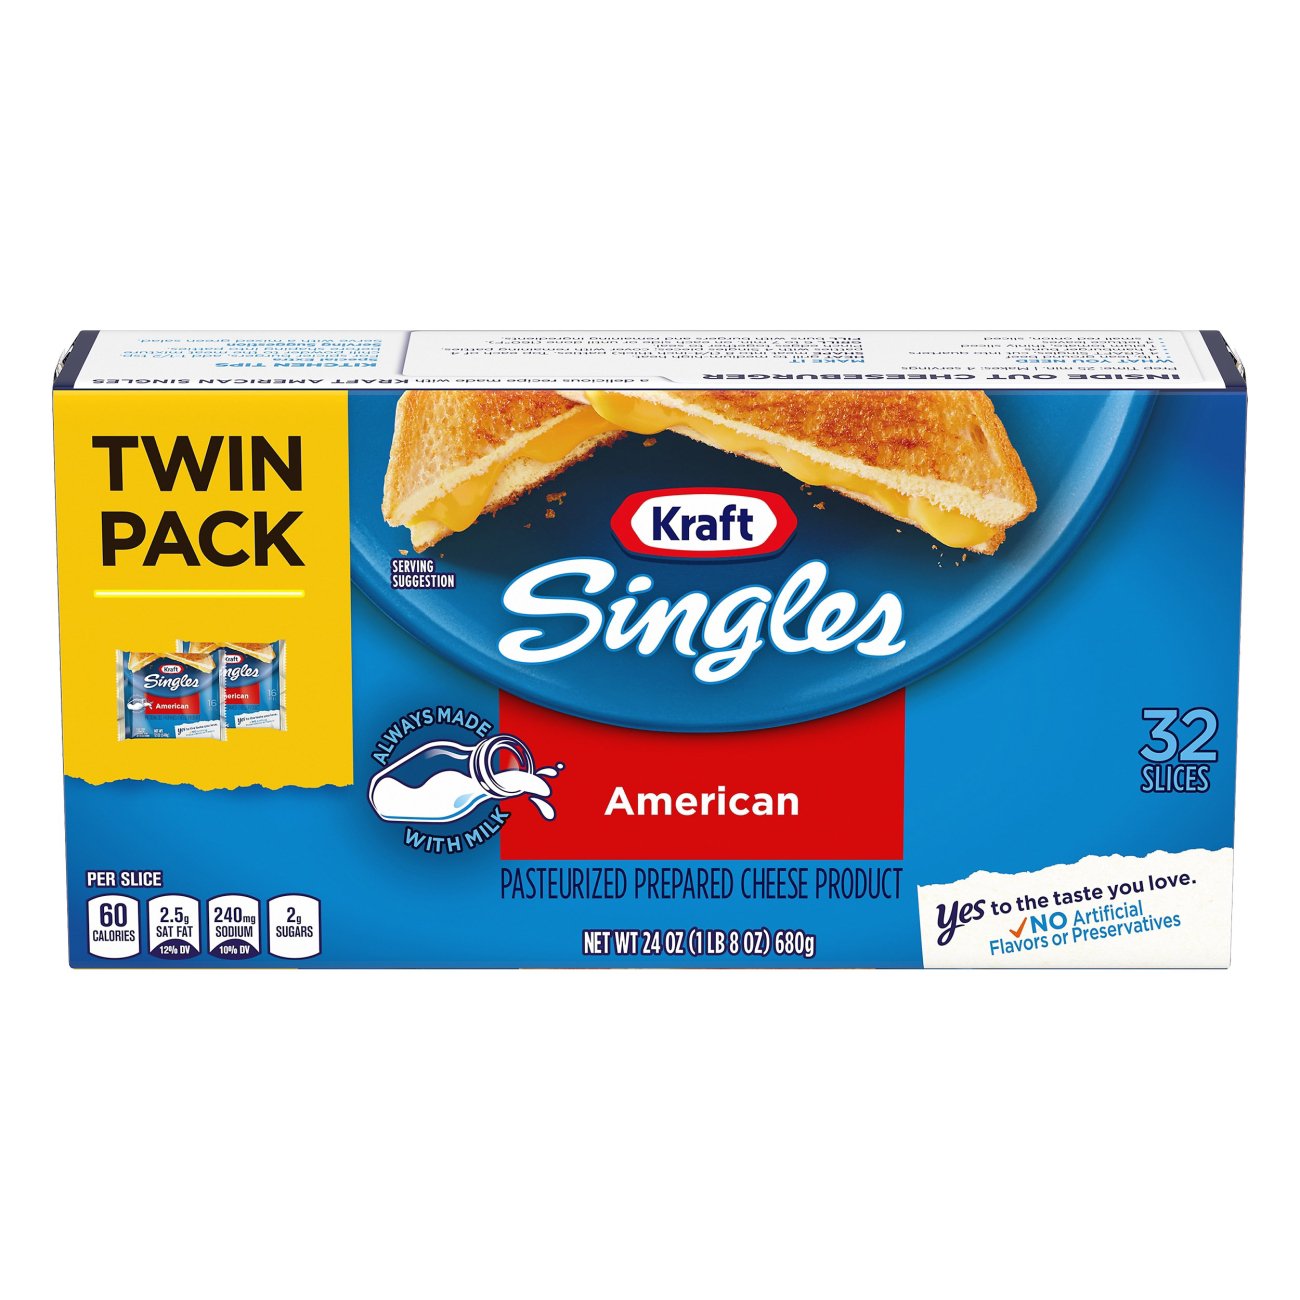 Kraft Singles American Cheese, Slices, Twin Pack